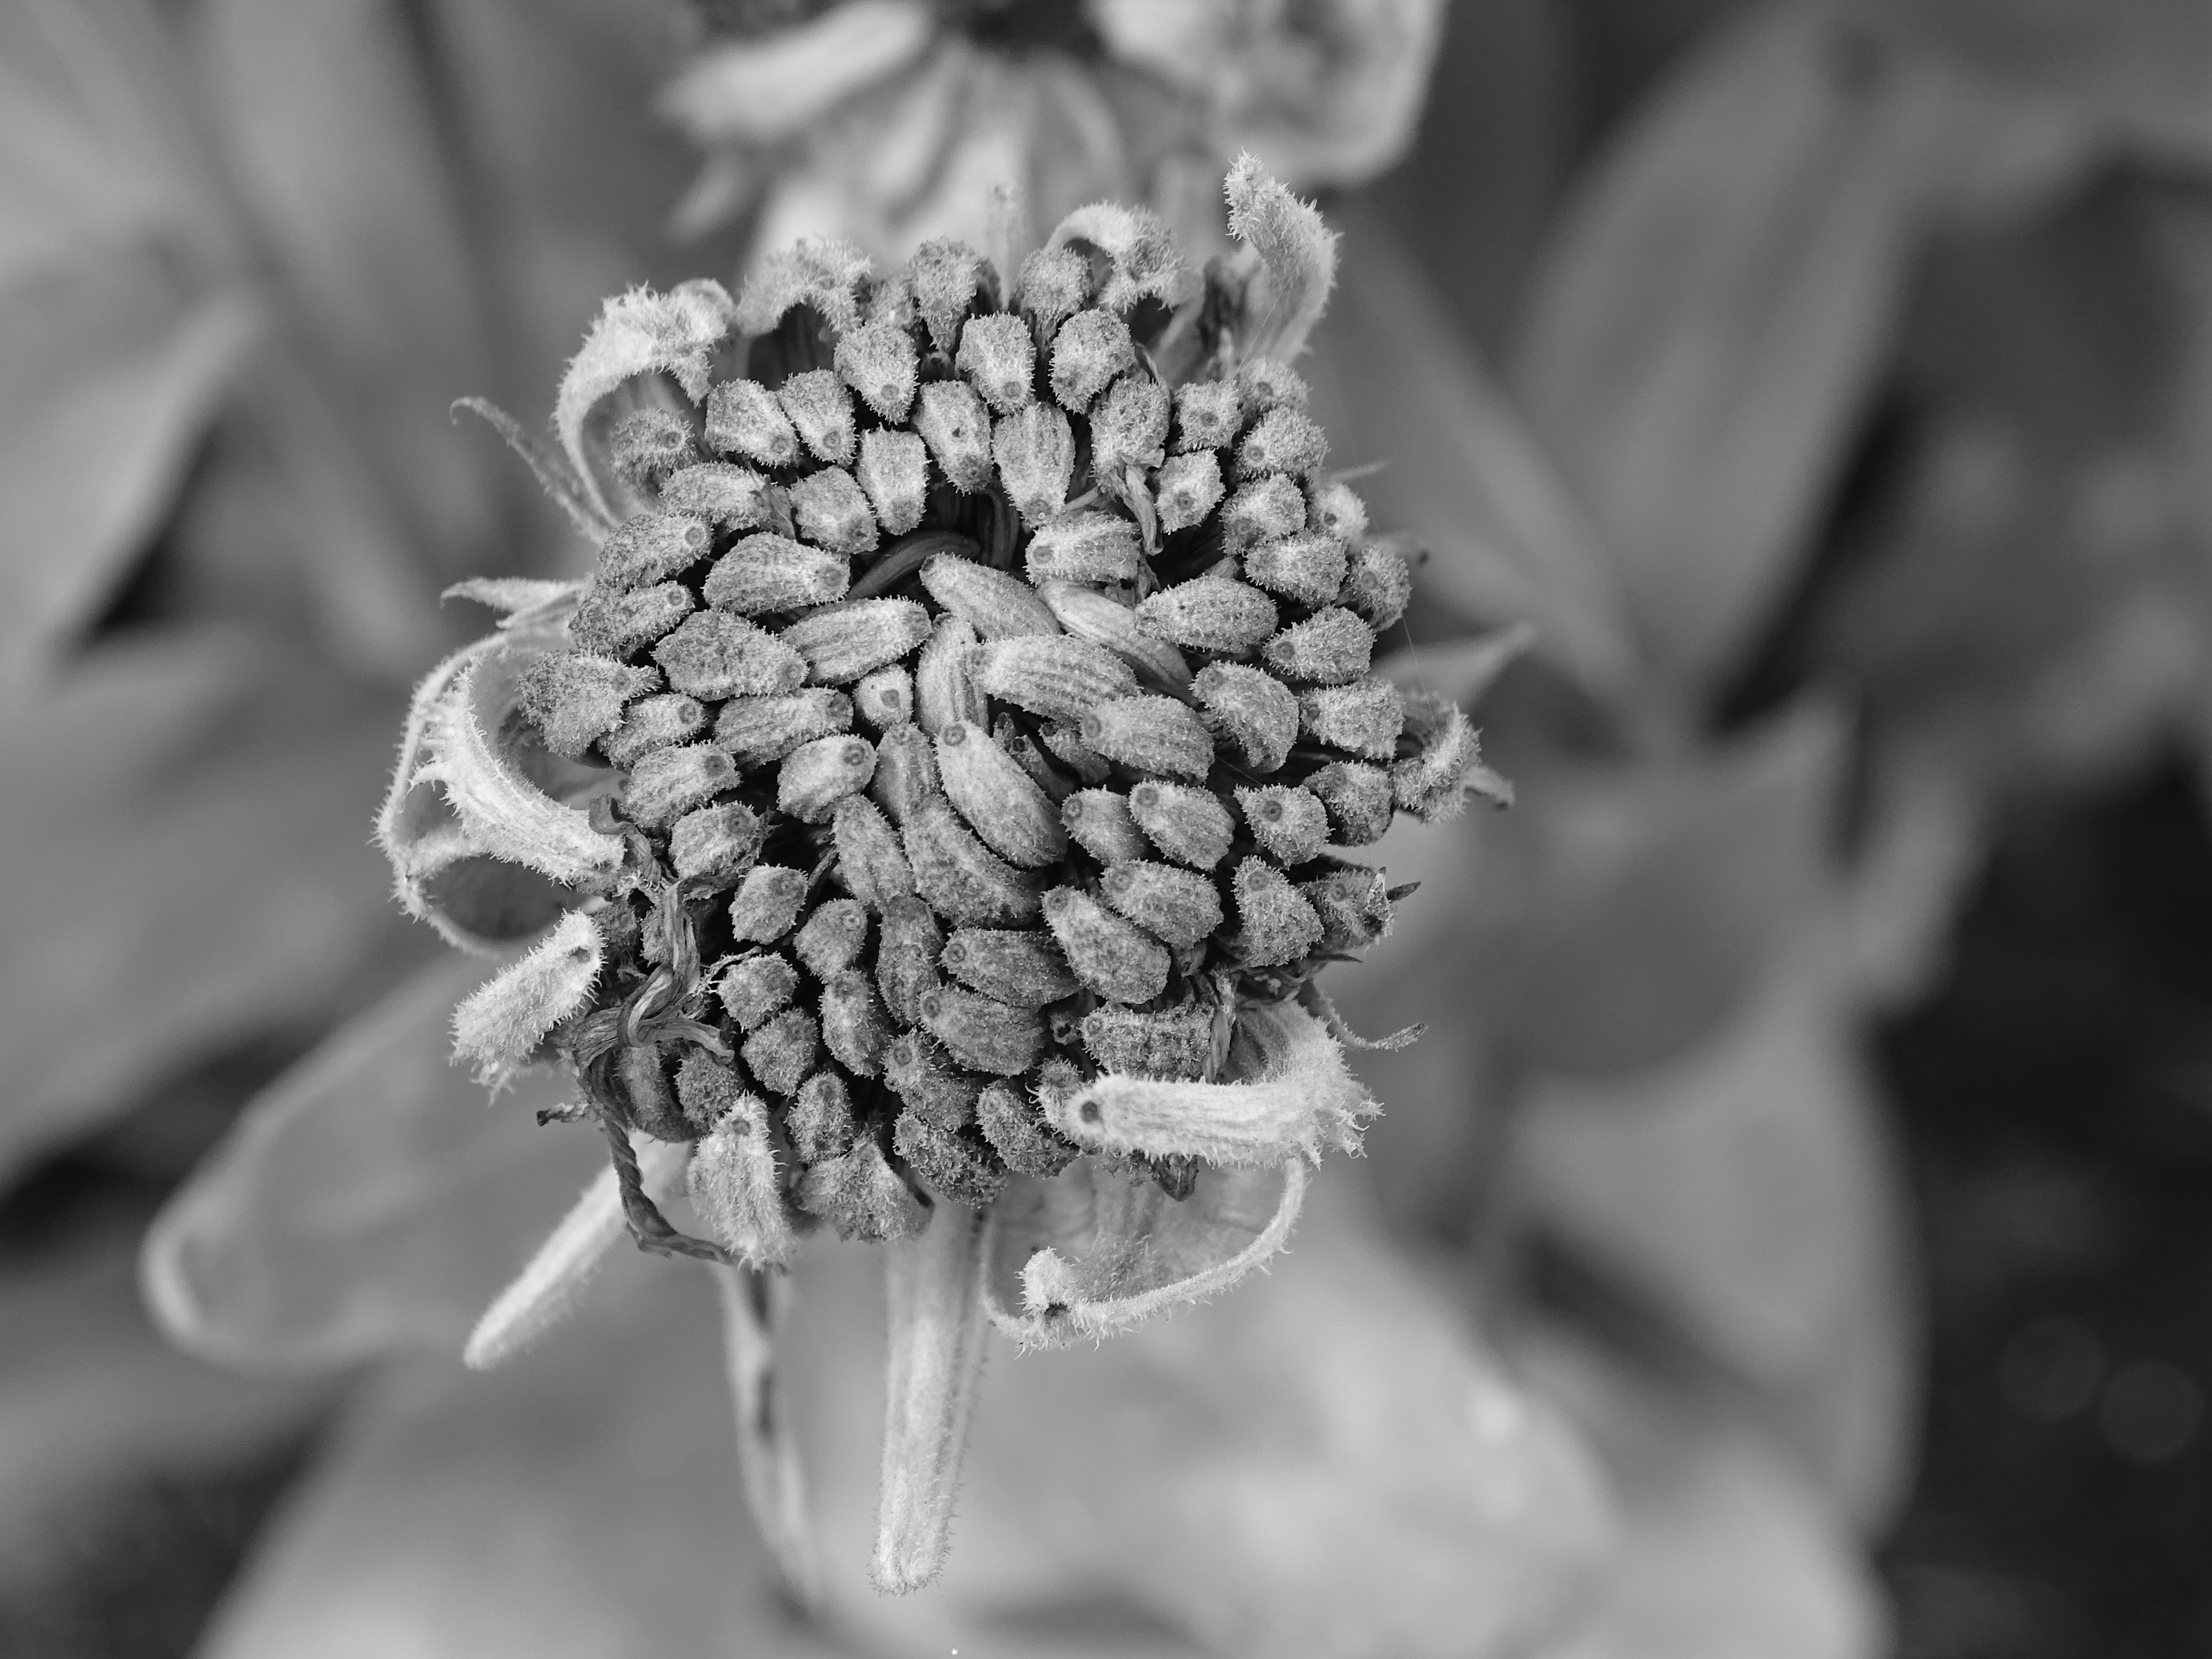 Calendula Seeds